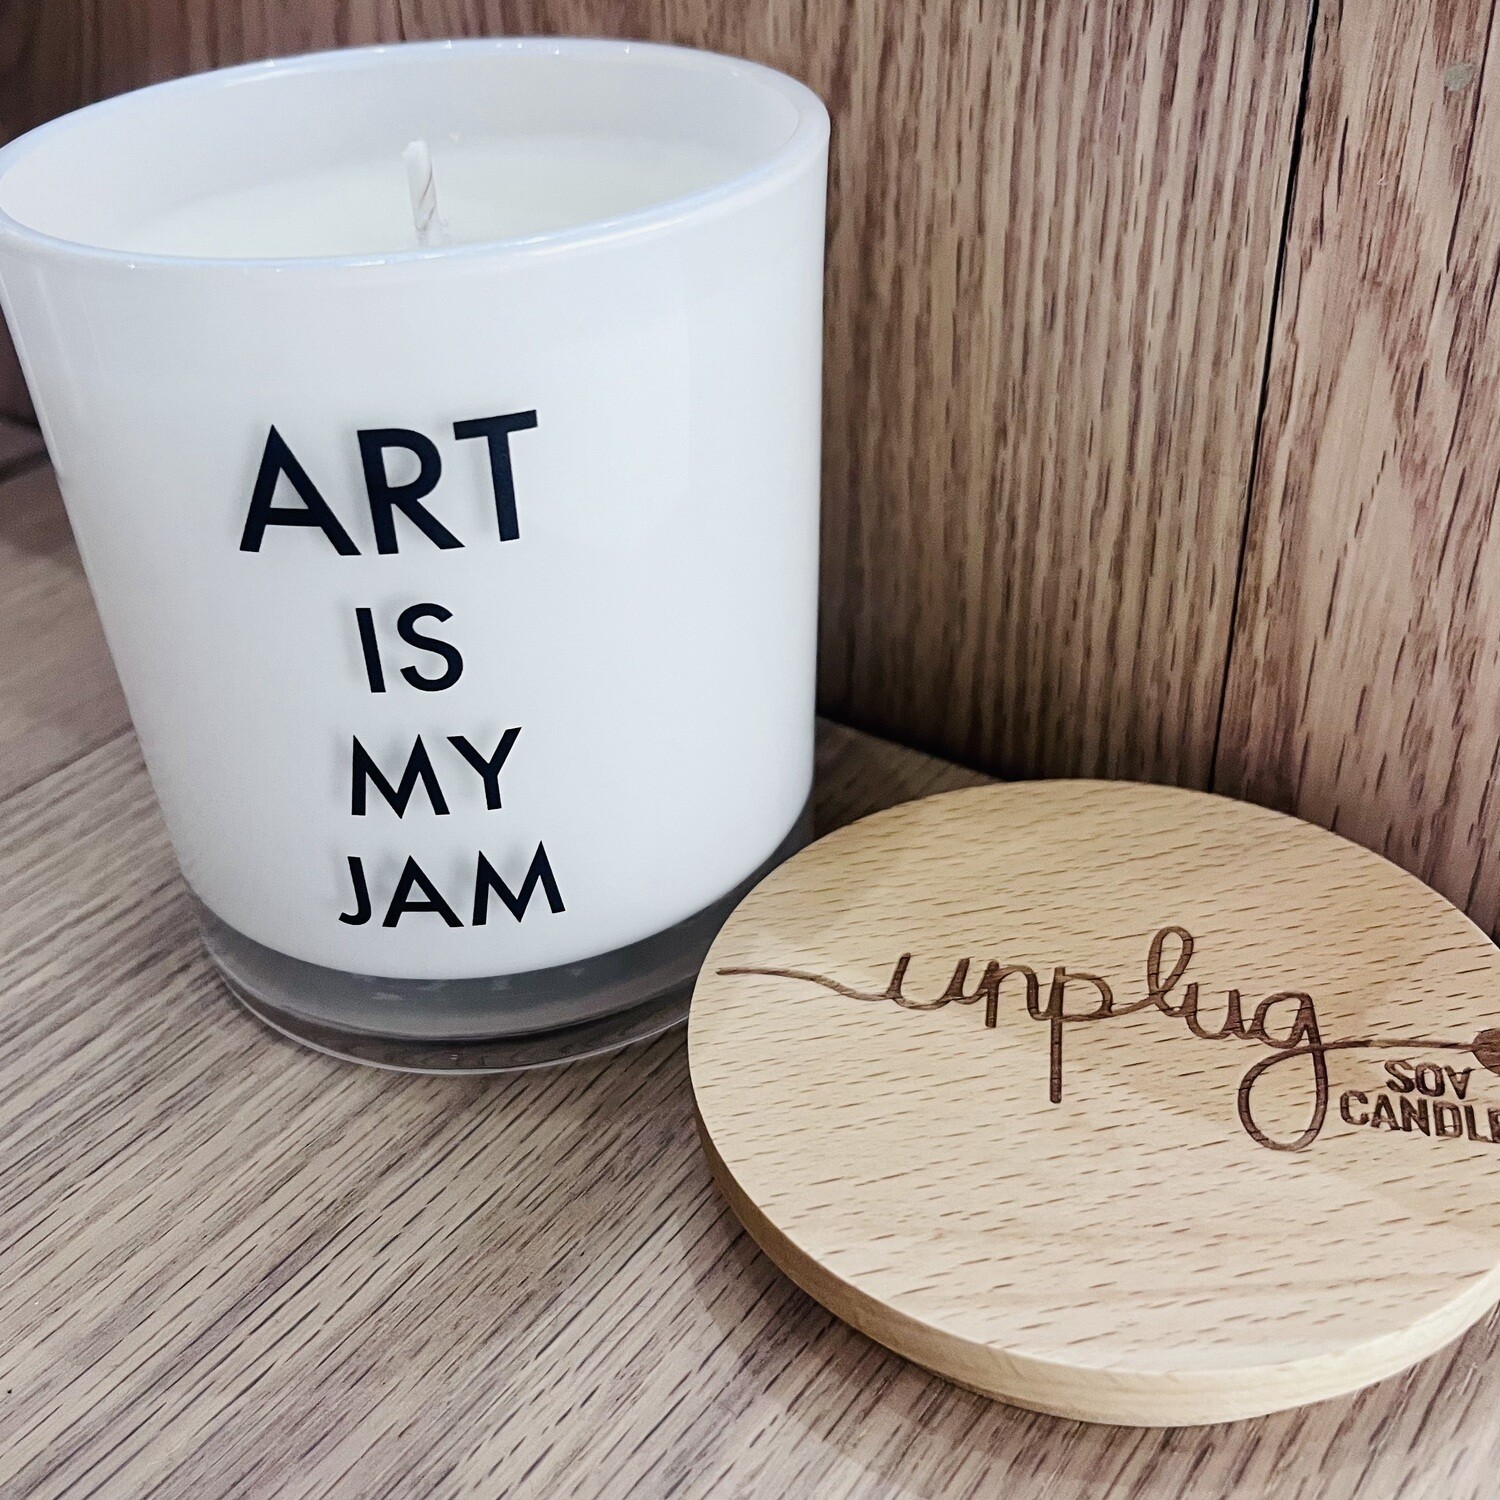 Unplug "Art Is My Jam" Soy Candle